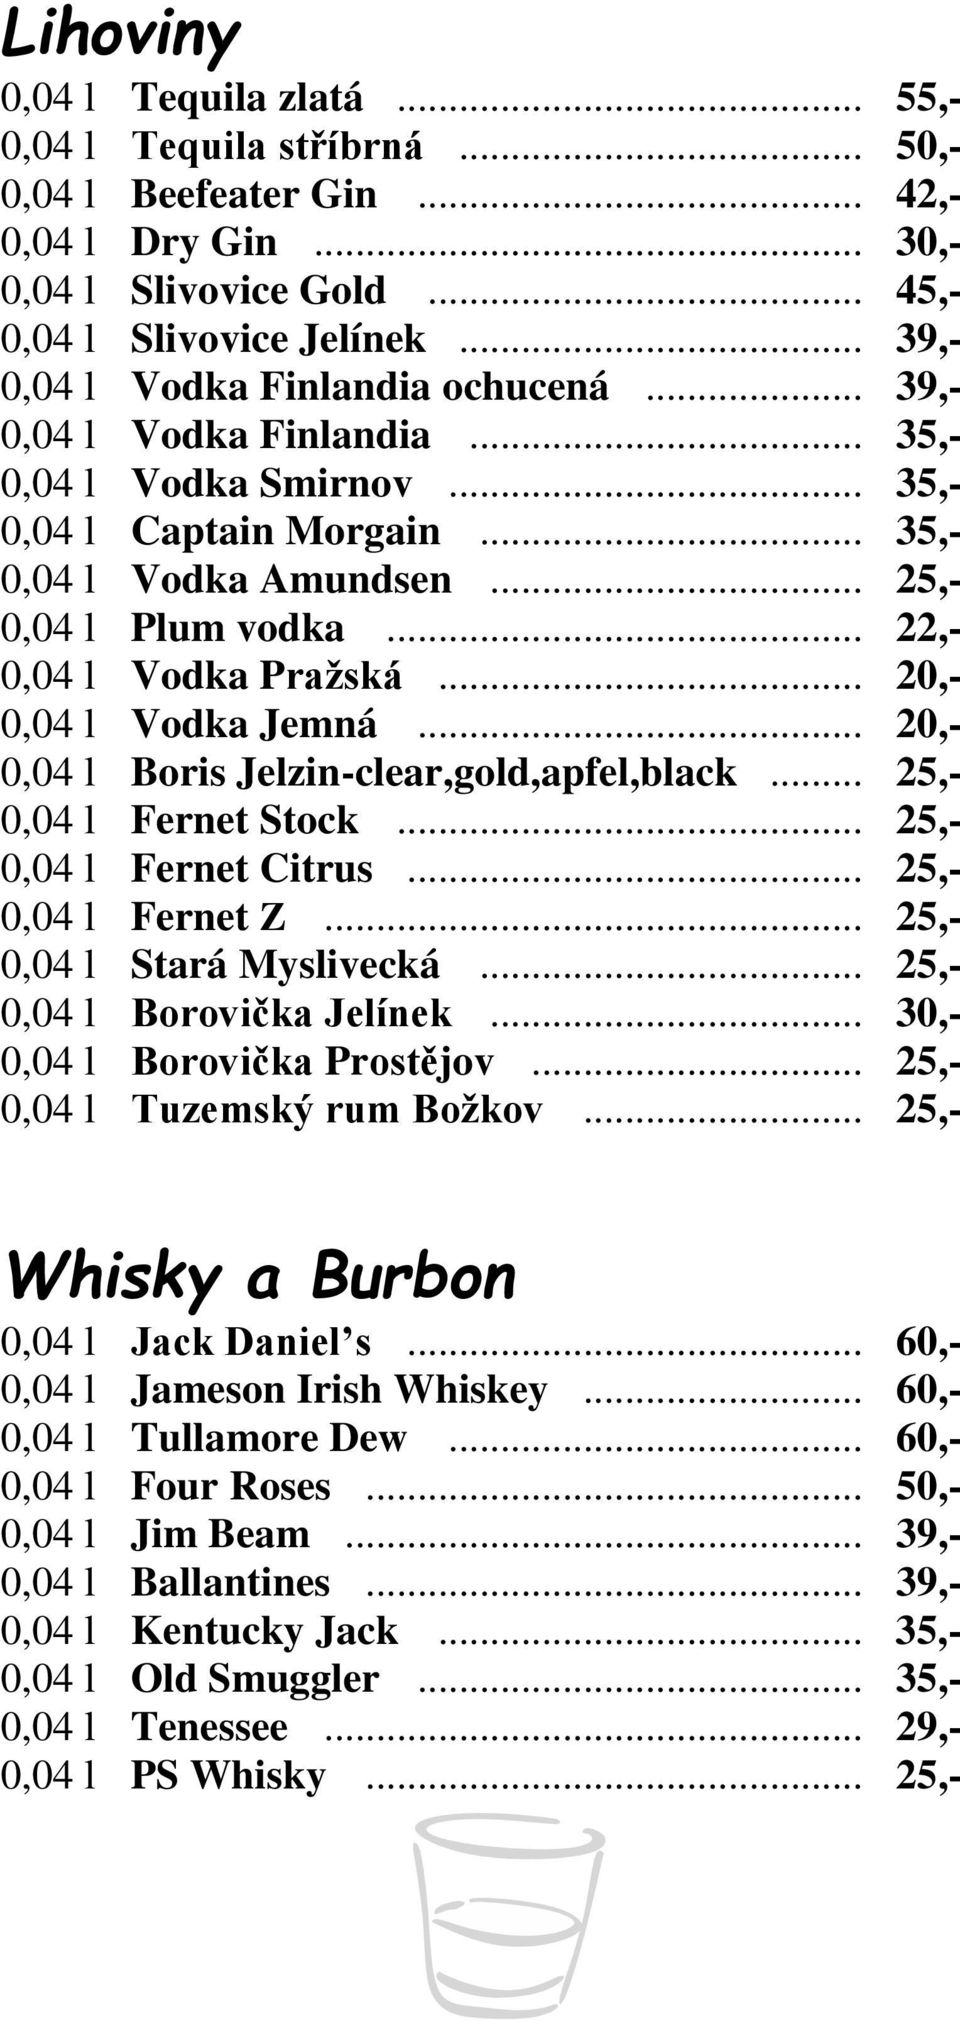 .. 22,- 0,04 l Vodka Pražská... 20,- 0,04 l Vodka Jemná... 20,- 0,04 l Boris Jelzin-clear,gold,apfel,black... 25,- 0,04 l Fernet Stock... 25,- 0,04 l Fernet Citrus... 25,- 0,04 l Fernet Z.